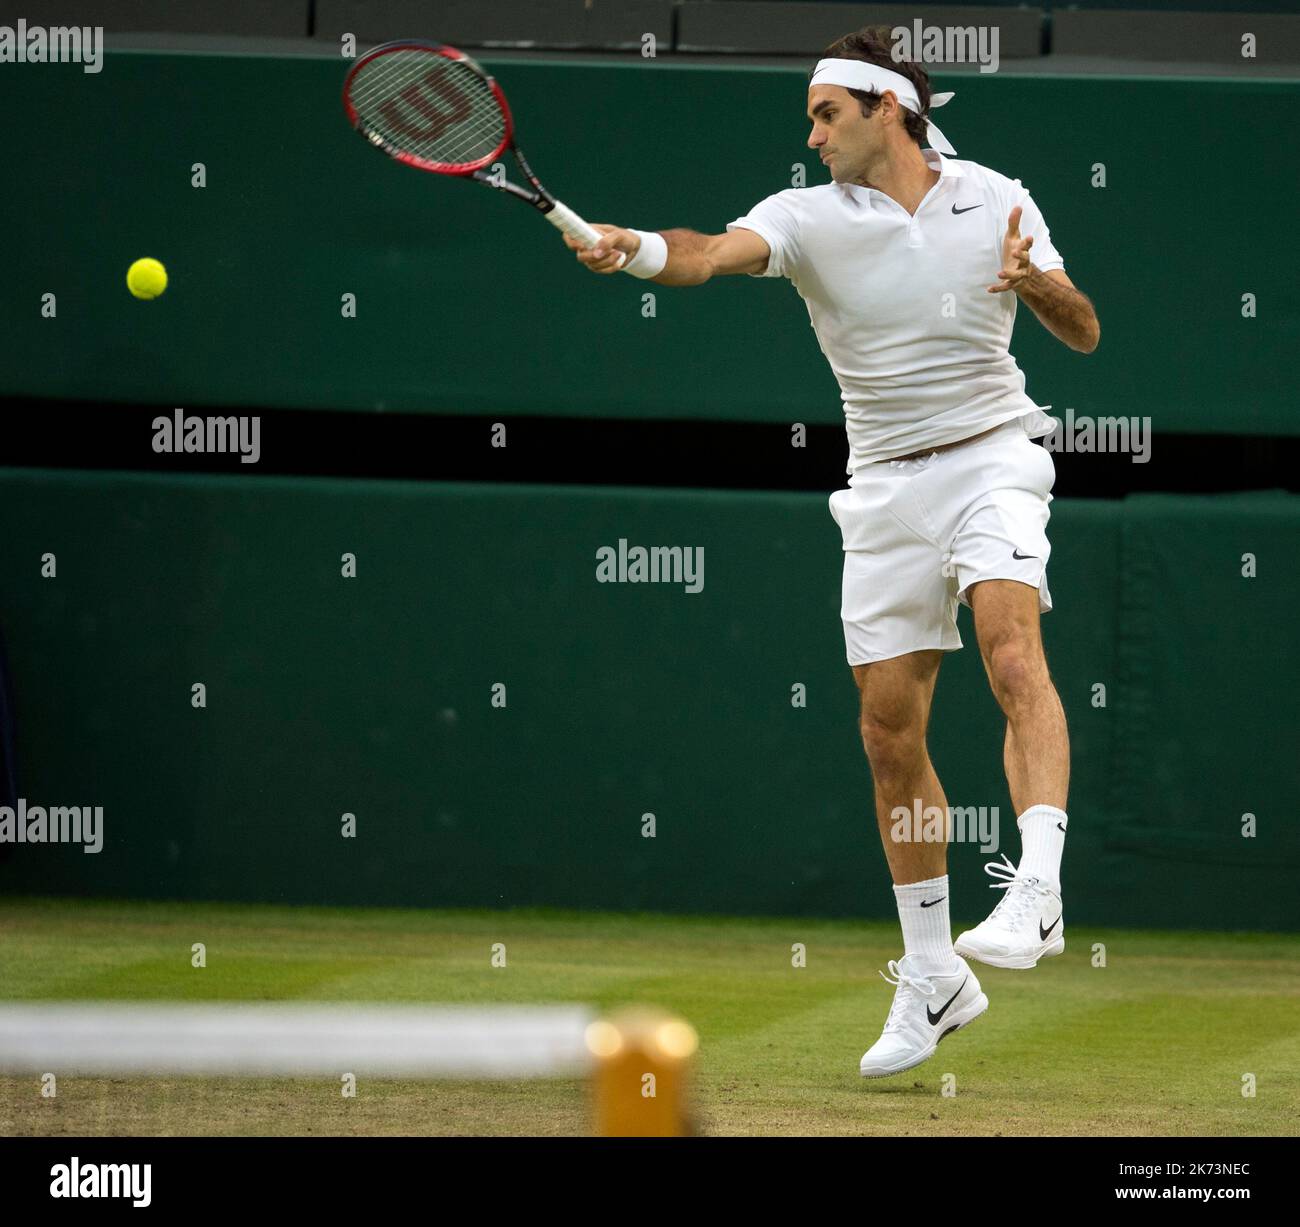 01/07/2016. Wimbledon 2016, hommes Singles, Roger Federer (SUI) c. Dan Evans (GBR), Centre court. Roger Federer en action pendant le match. Banque D'Images